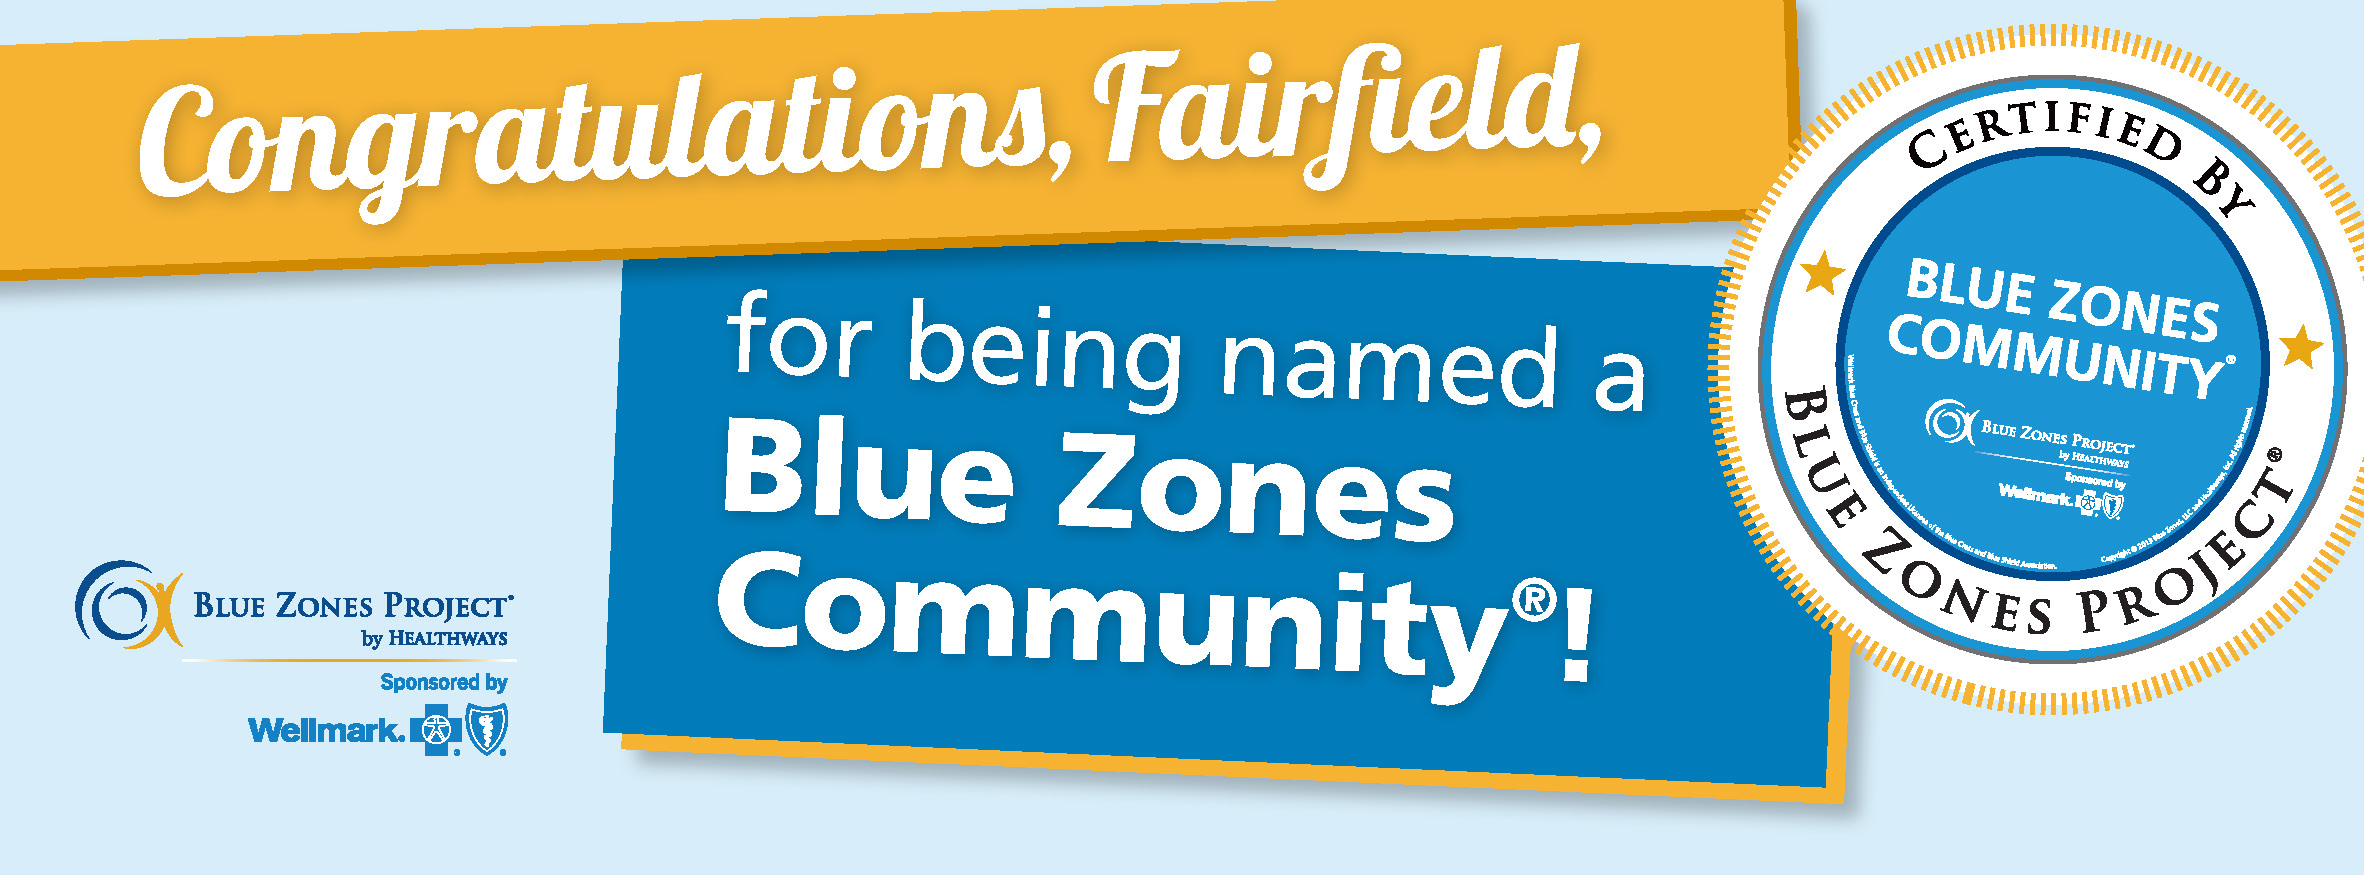 Fairfield BZ Certified